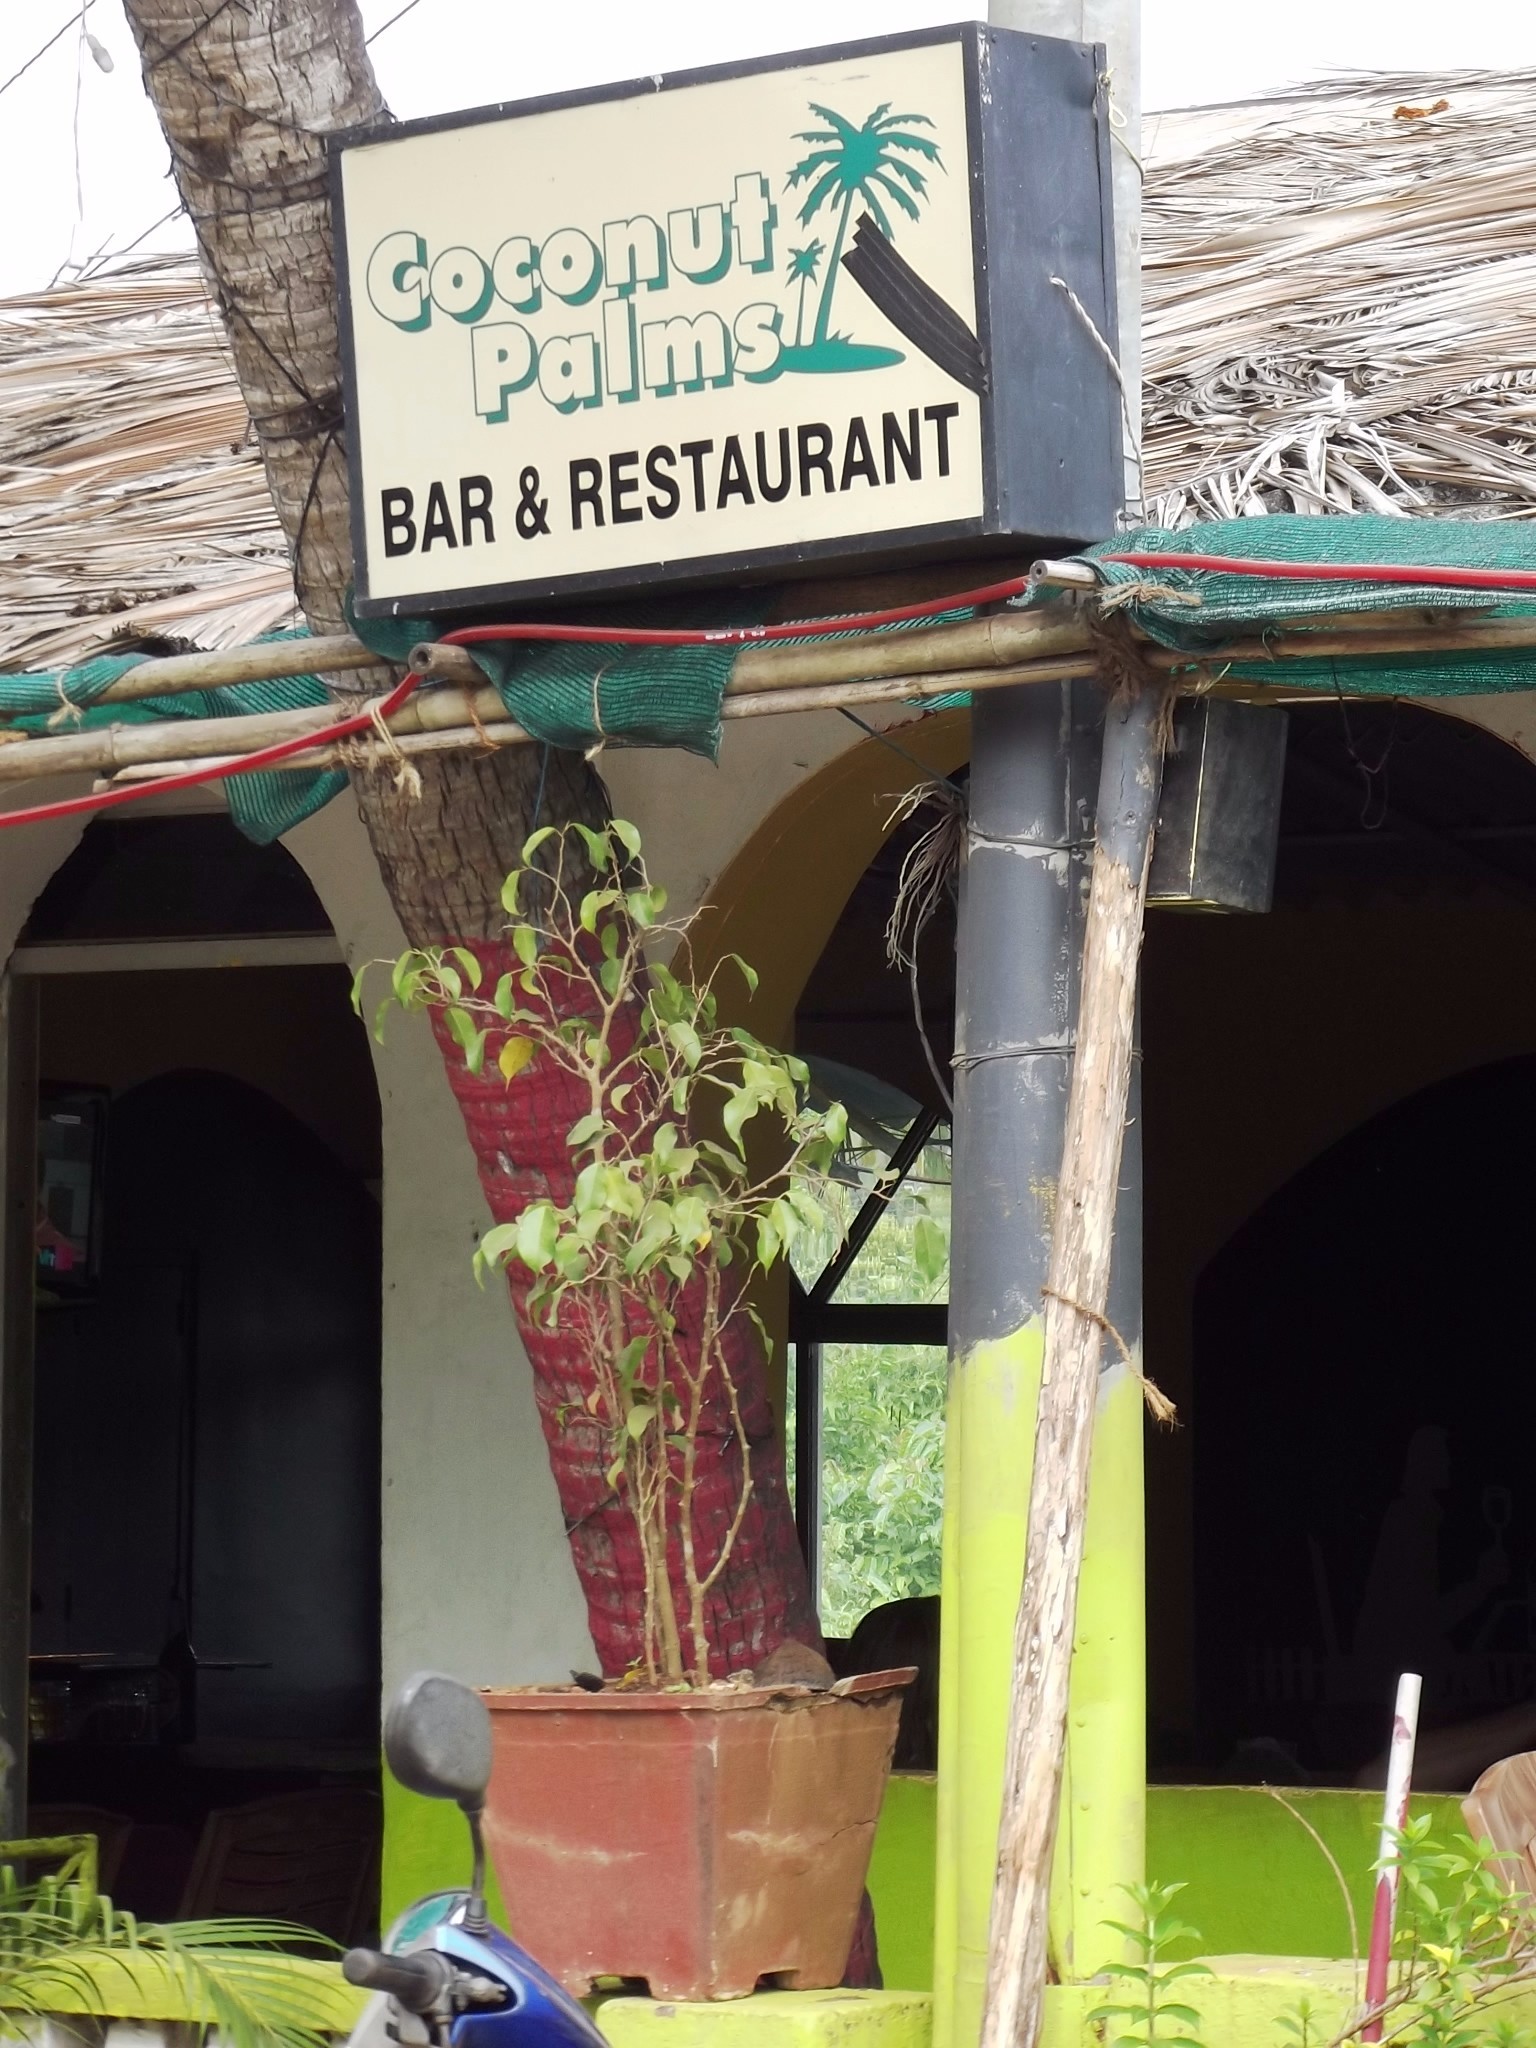 Пляж Кавелоссим <br/>
Cavelossim Beach<br/>
Кафе Coconut Palms Bar & Restaurant